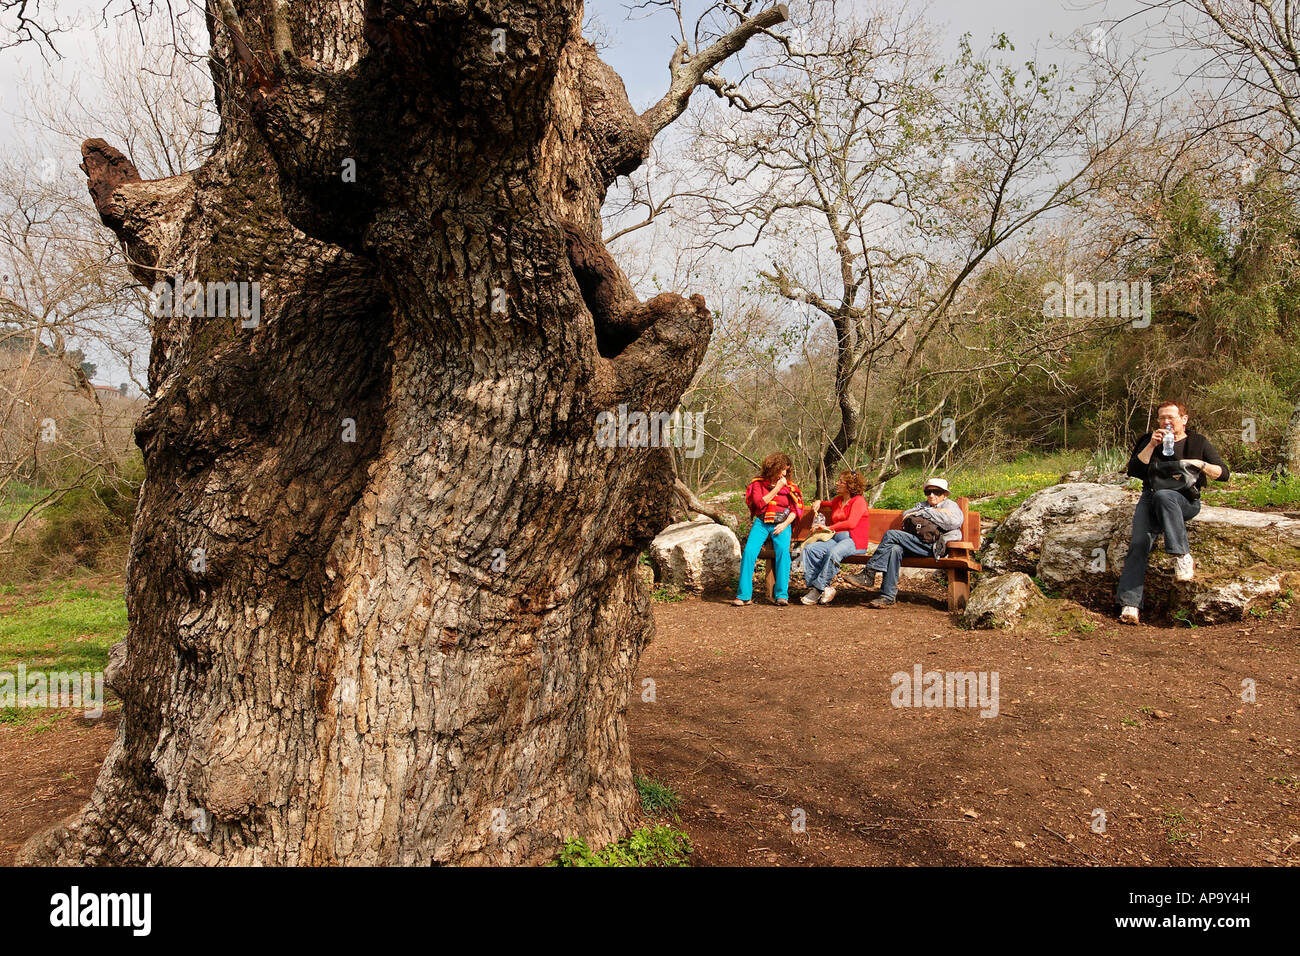 Israele la Bassa Galilea Monte Tabor Oak Quercus Ithaburensis albero in Tivon Foto Stock